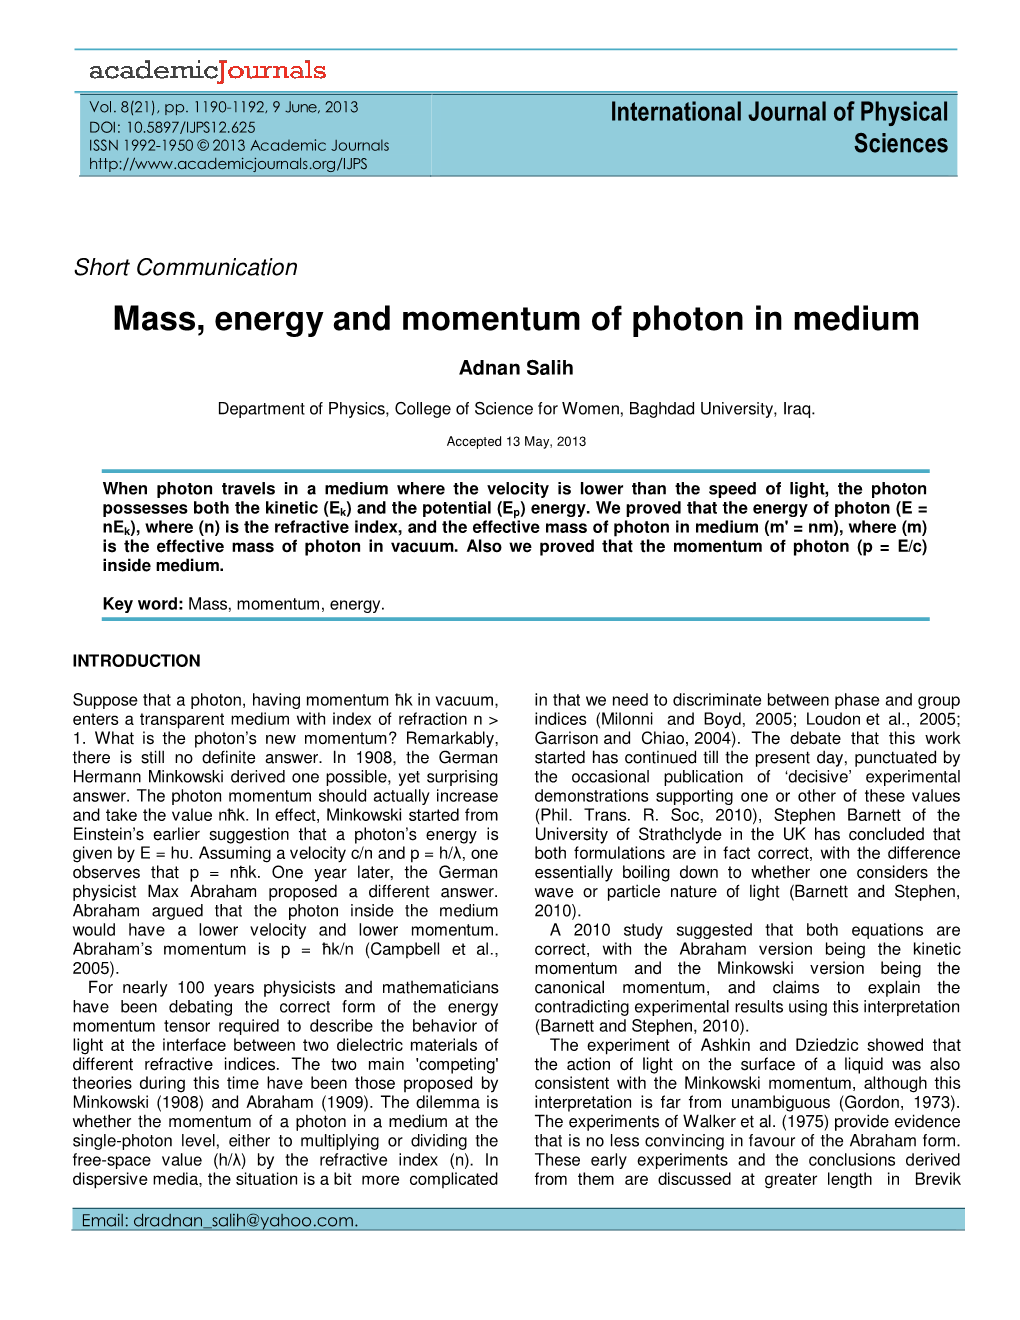 Mass, Energy and Momentum of Photon in Medium